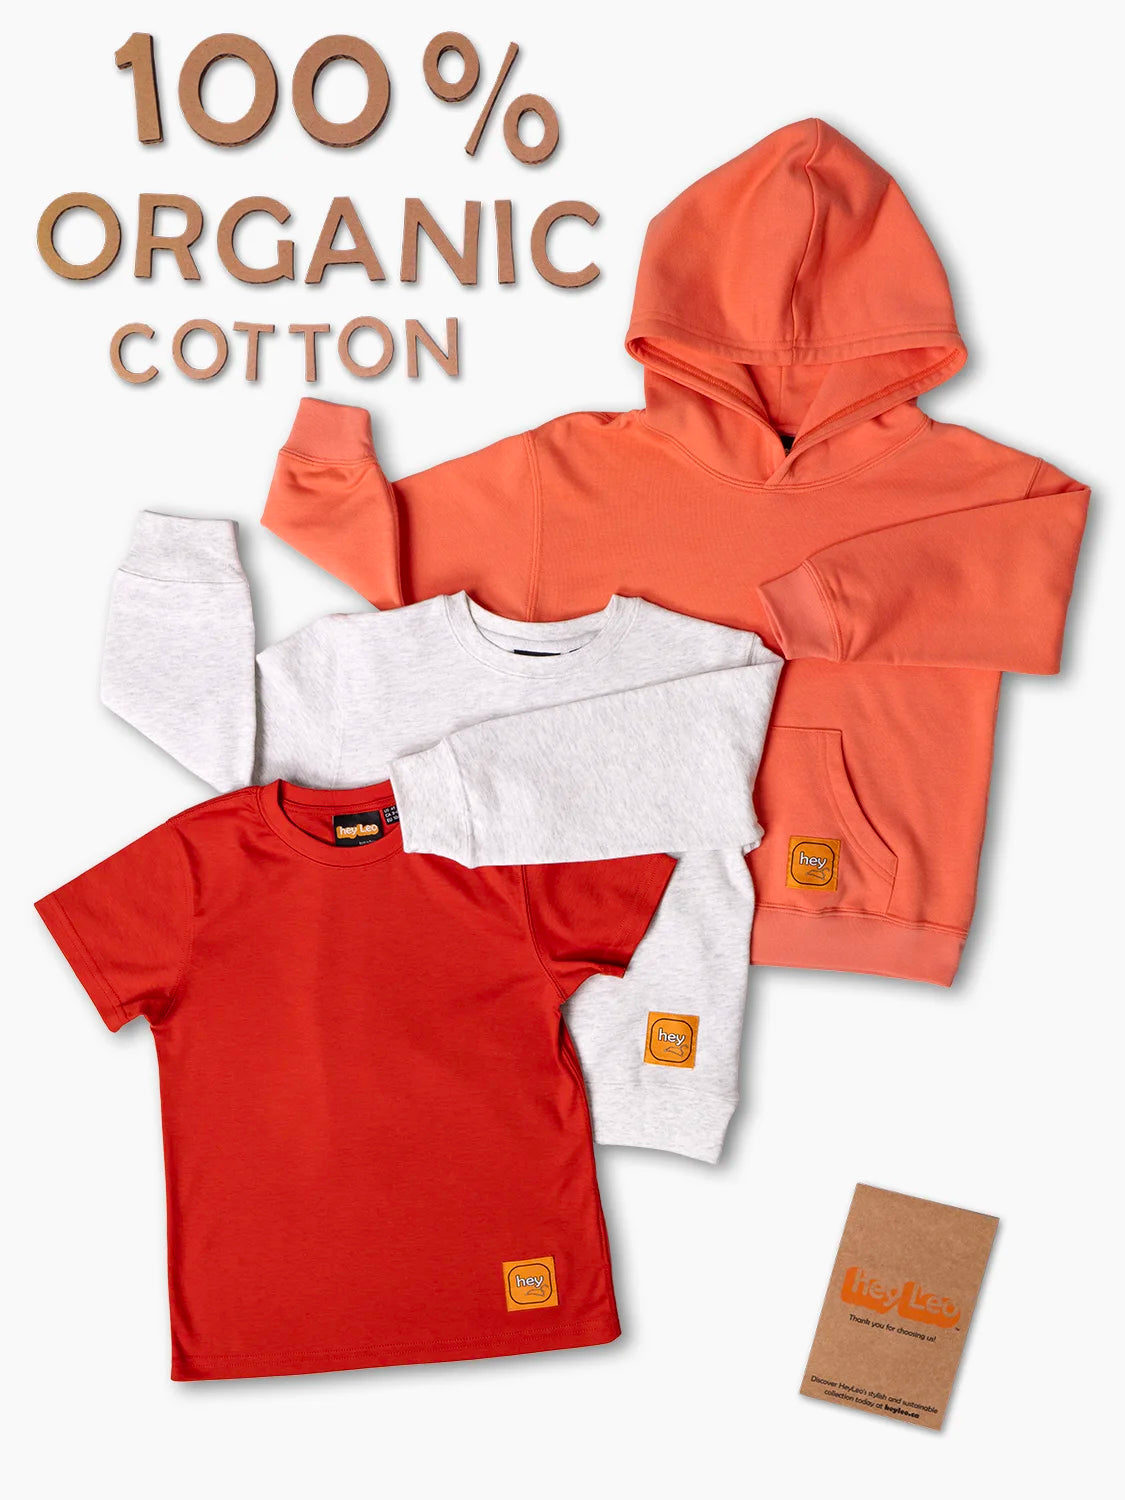 100% Organic Cotton 3-piece Outfit Set Bright Orange/Red